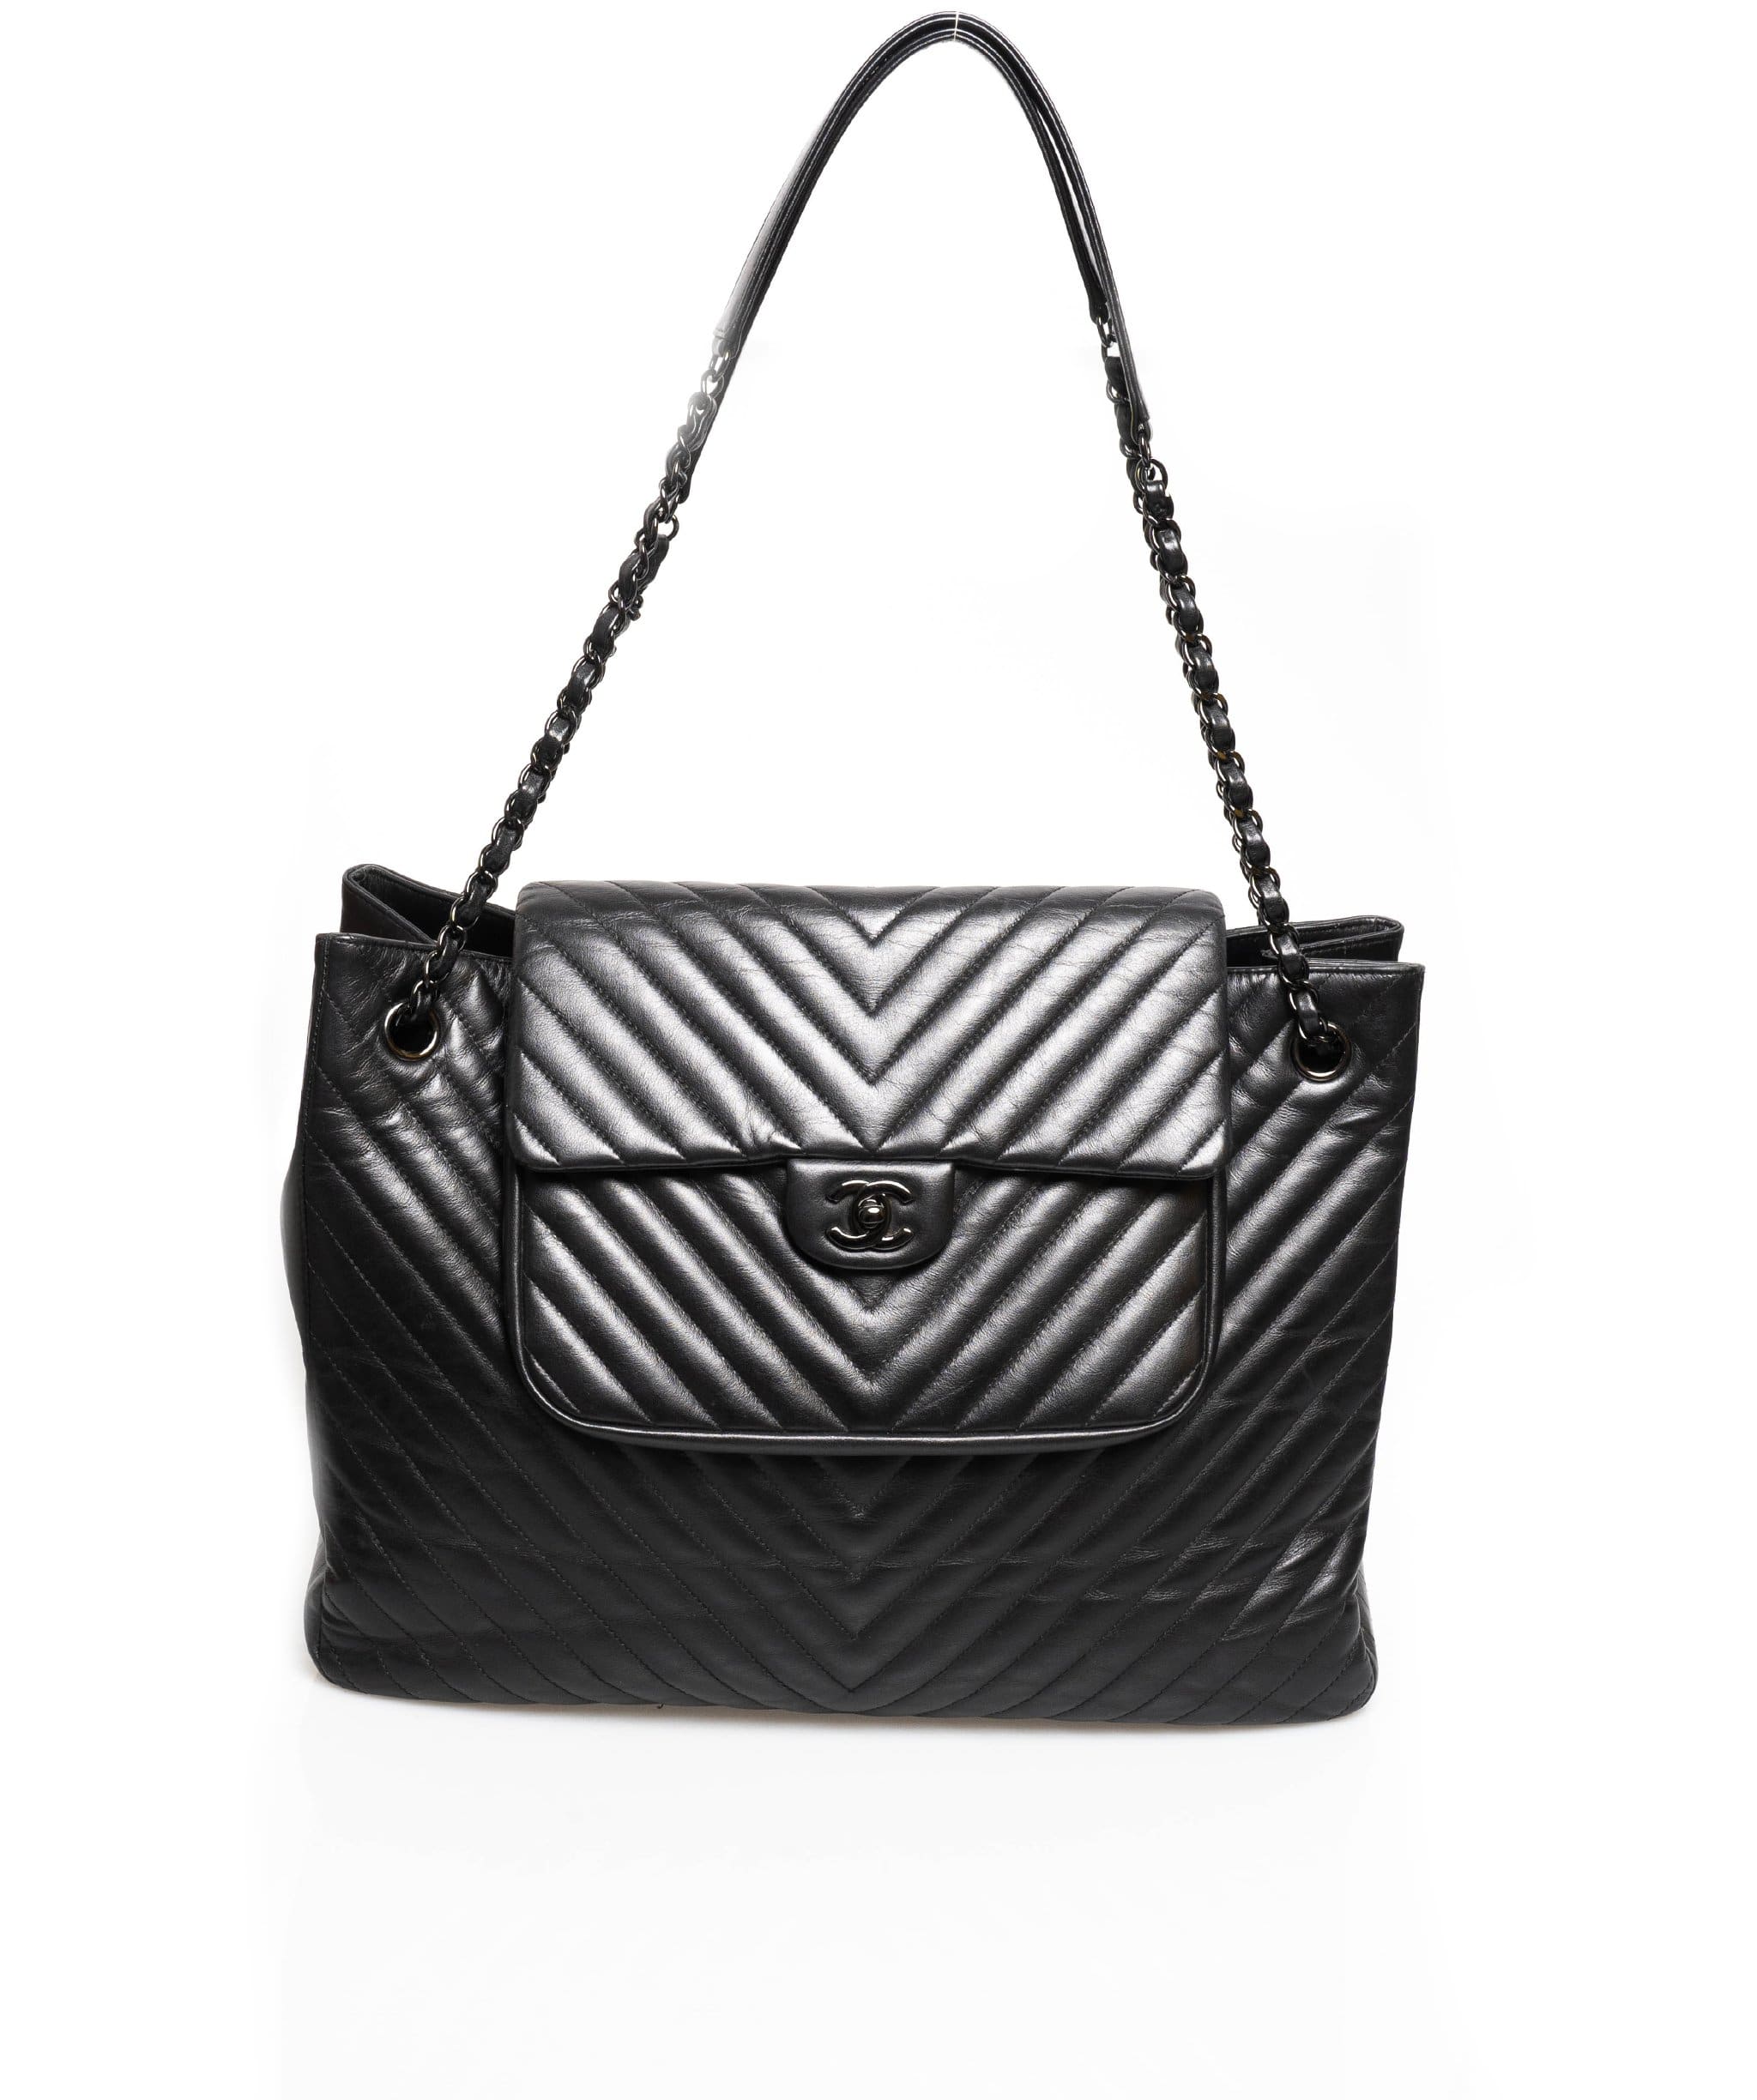 chanel handbag black leather purse